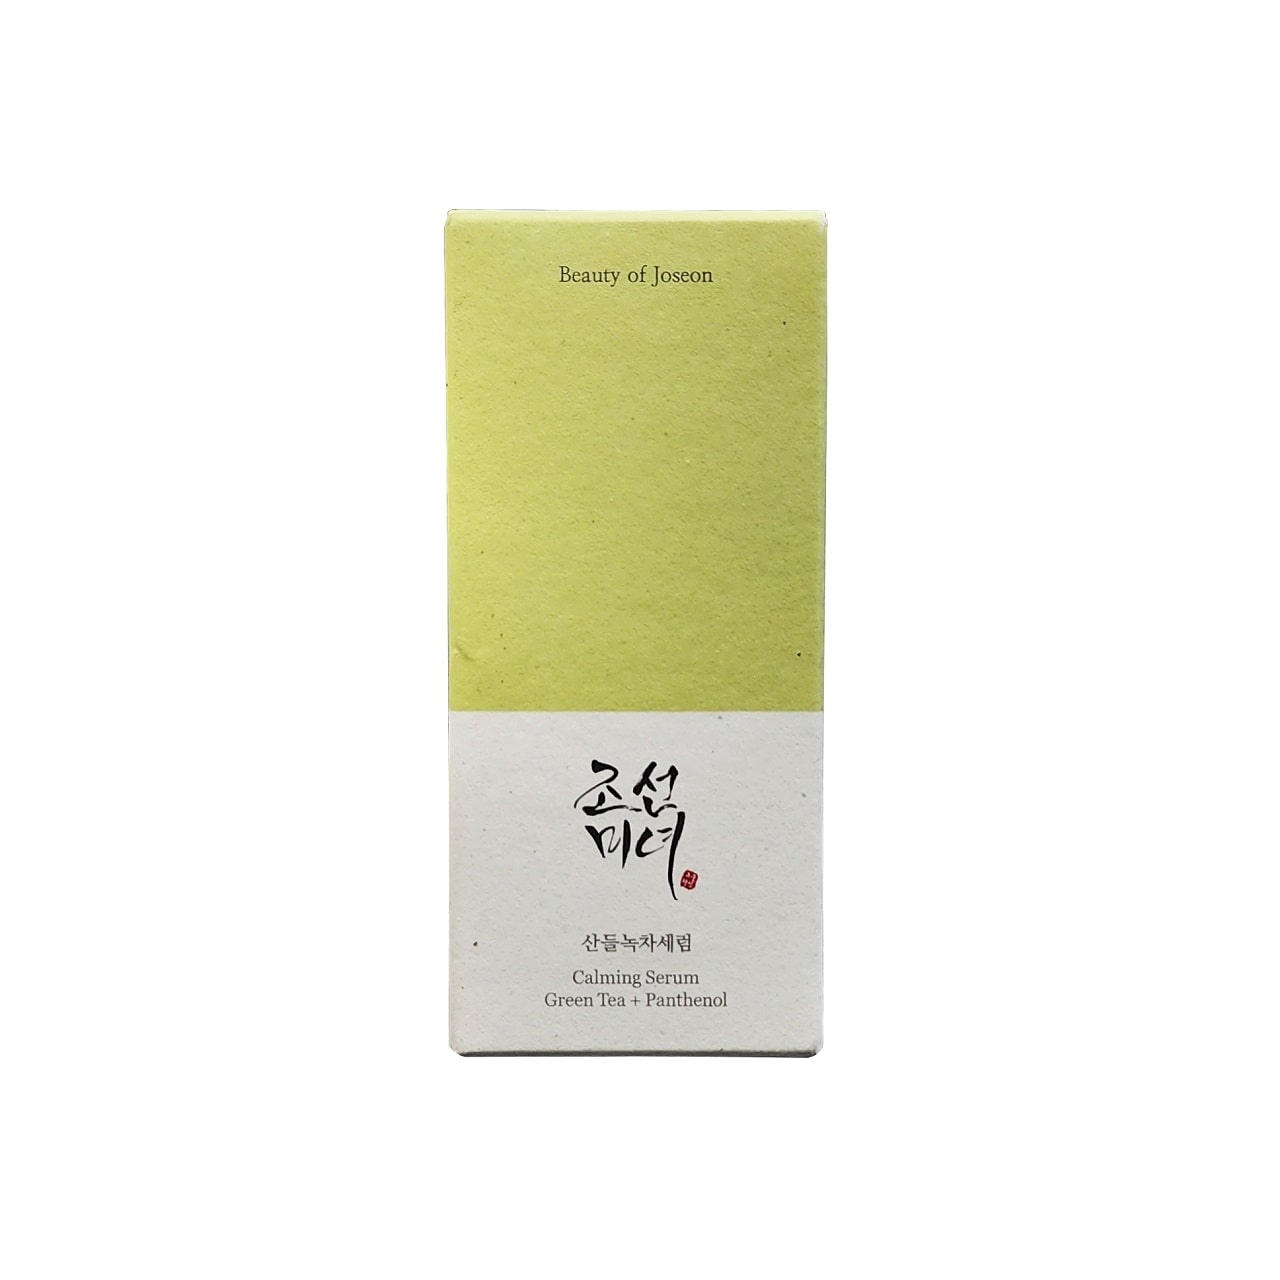 Product label for Beauty of Joseon Calming Serum Green Tea + Panthenol (30 mL)